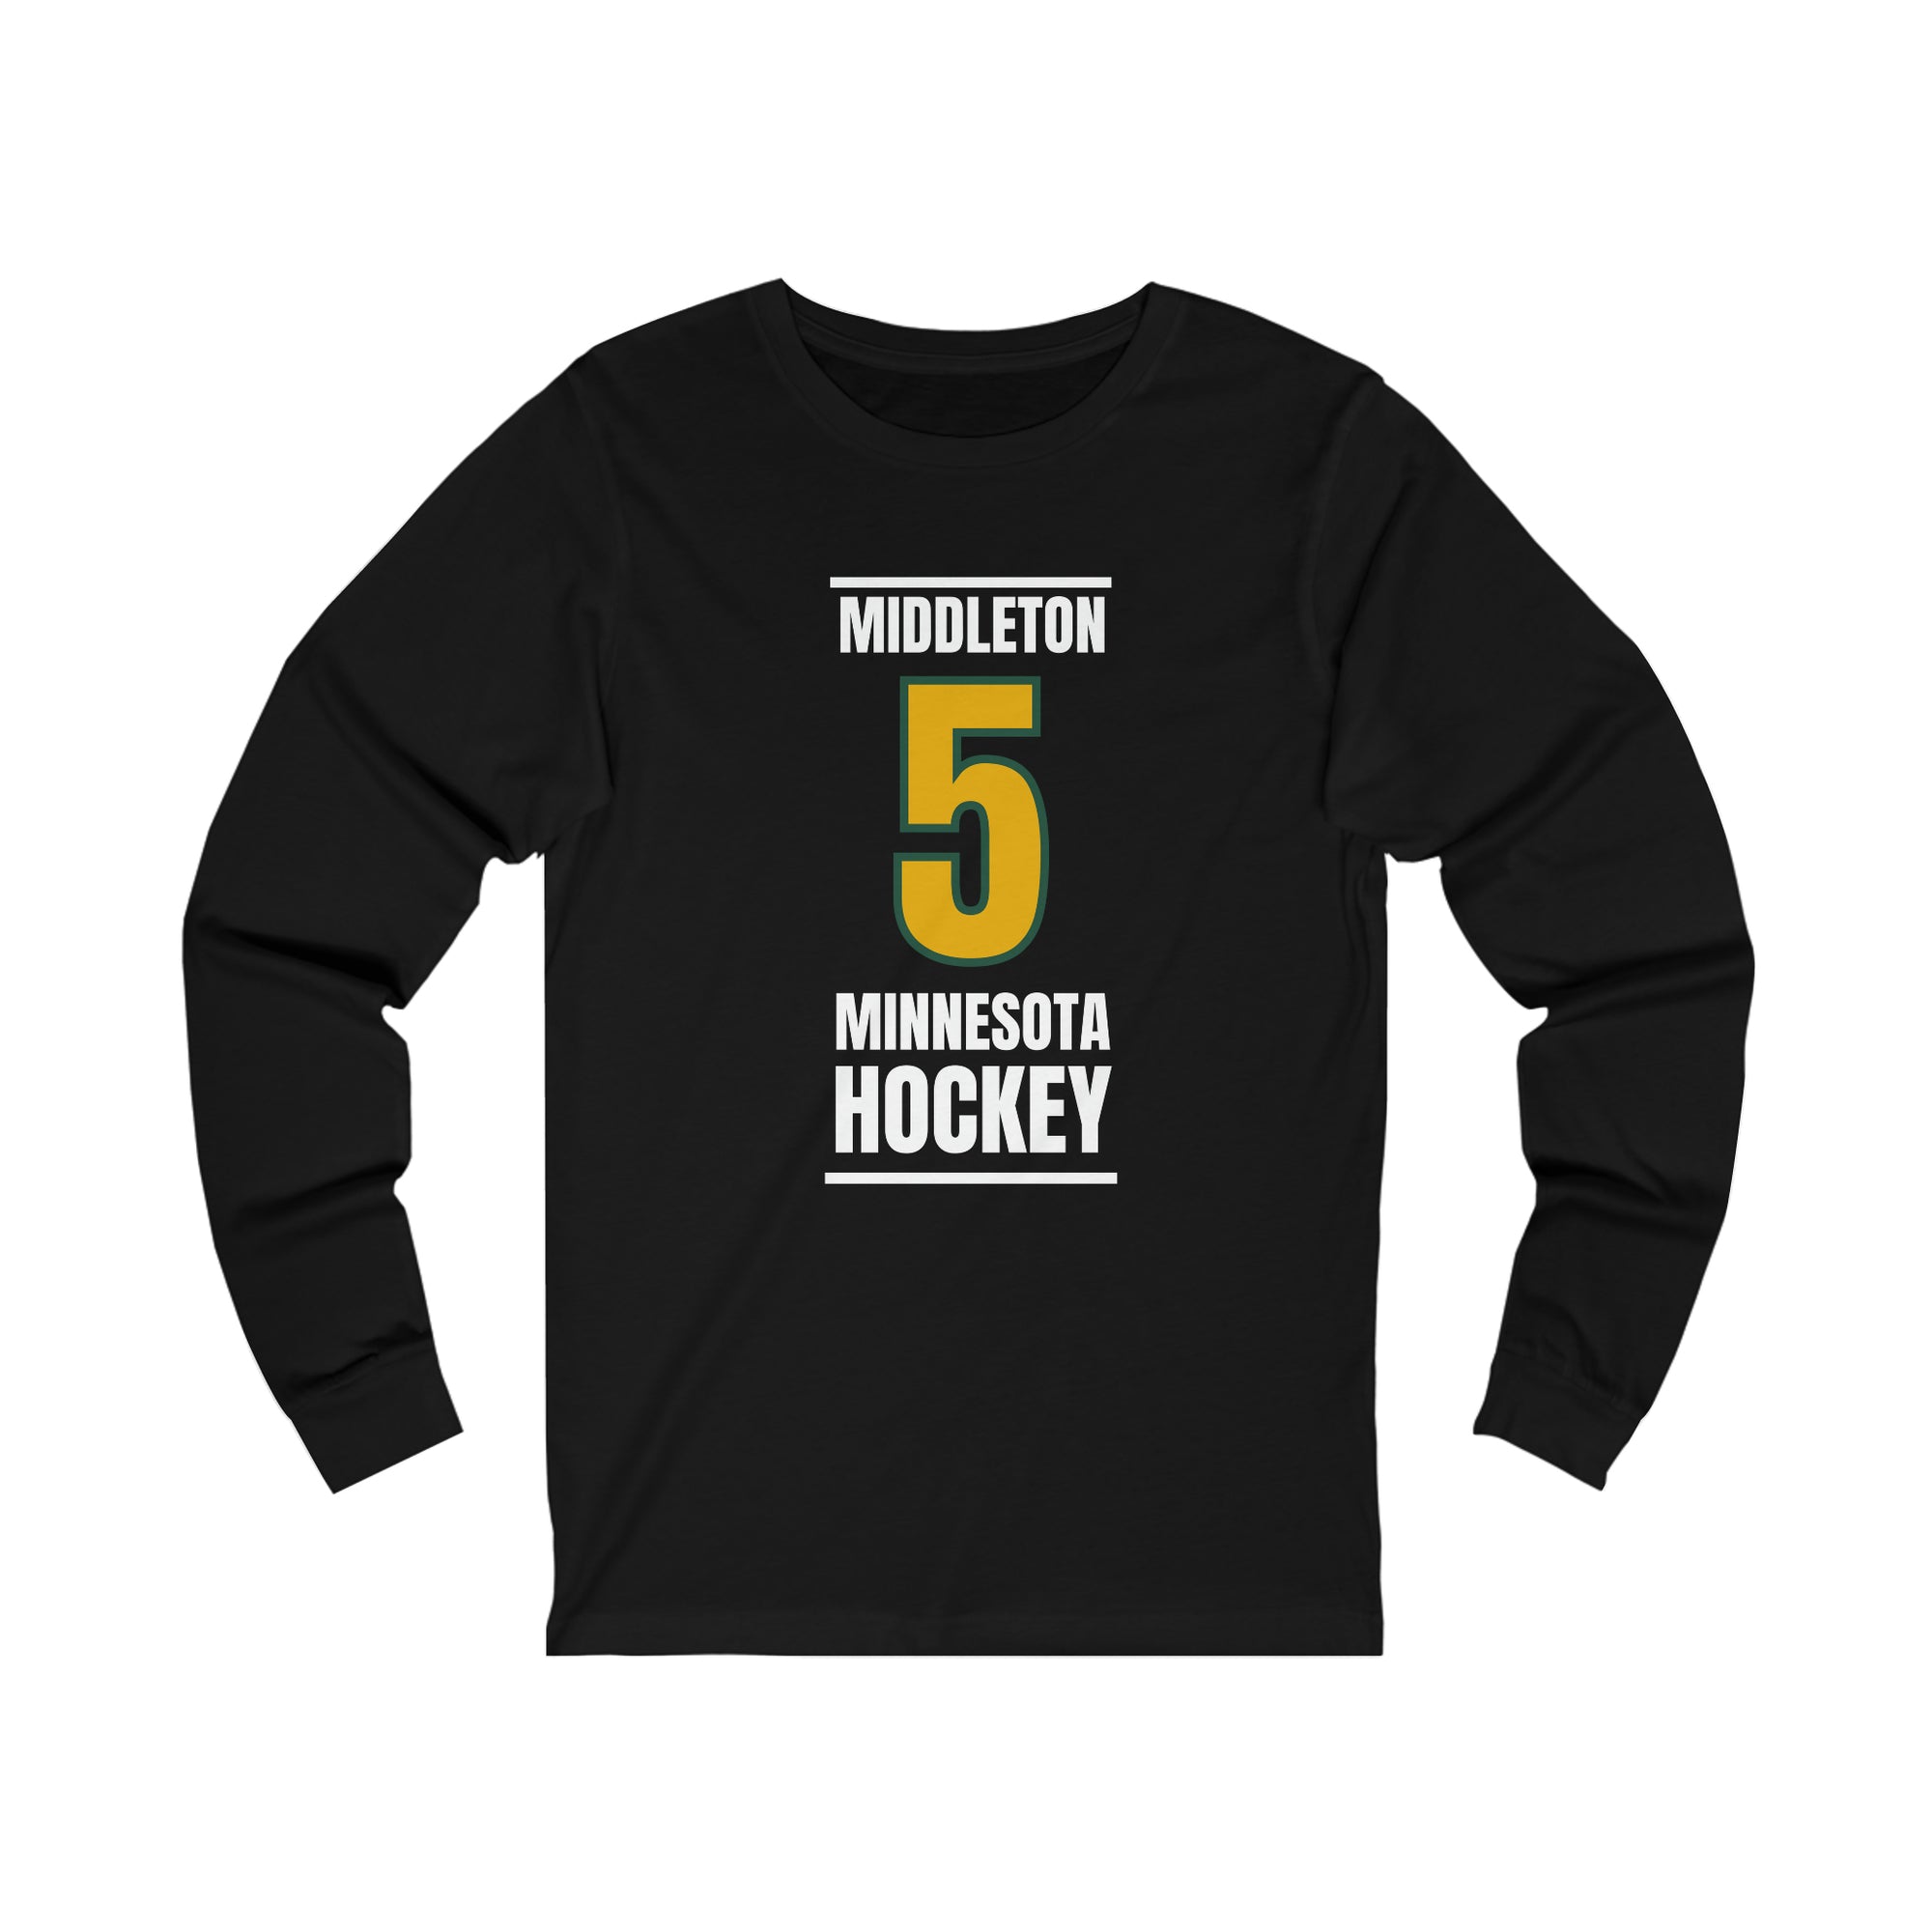 Middleton 5 Minnesota Hockey Gold Vertical Design Unisex Jersey Long Sleeve Shirt